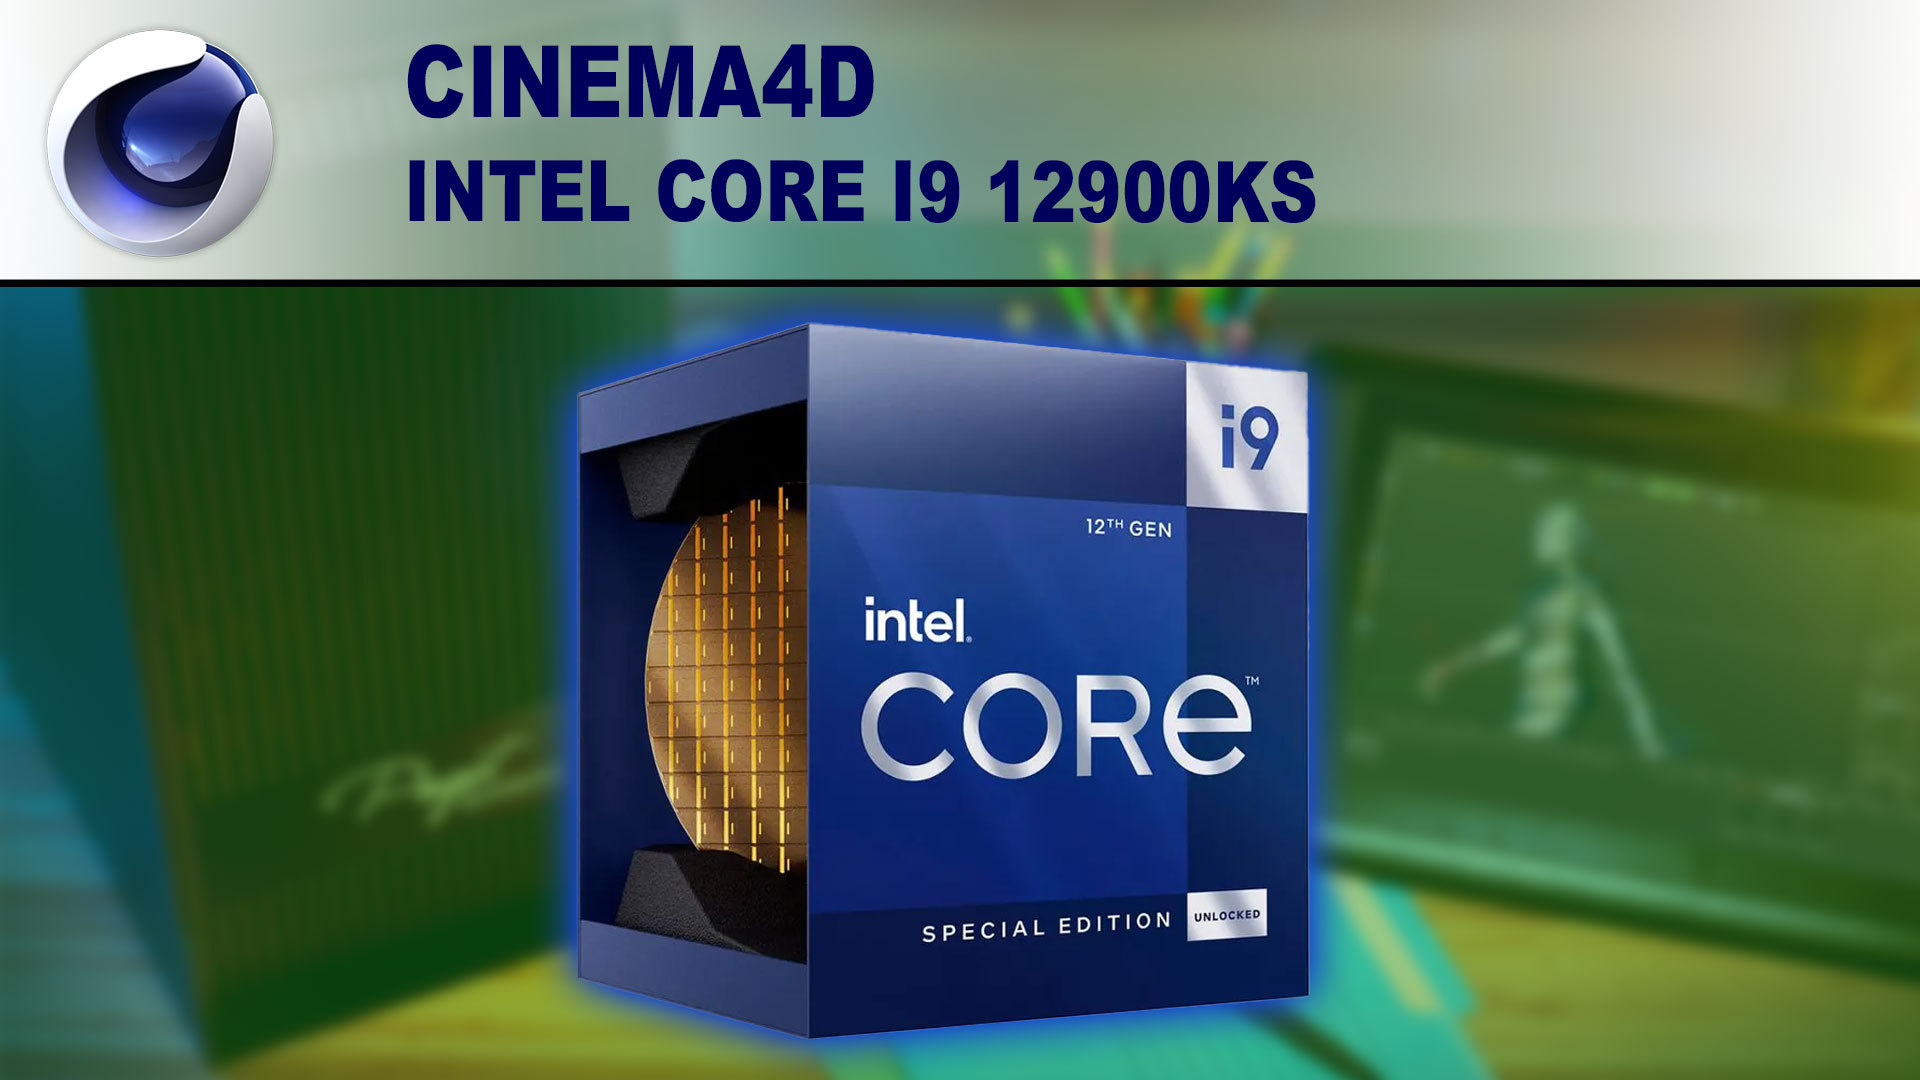 Intel Core i9 12900KS for Cinema 4D